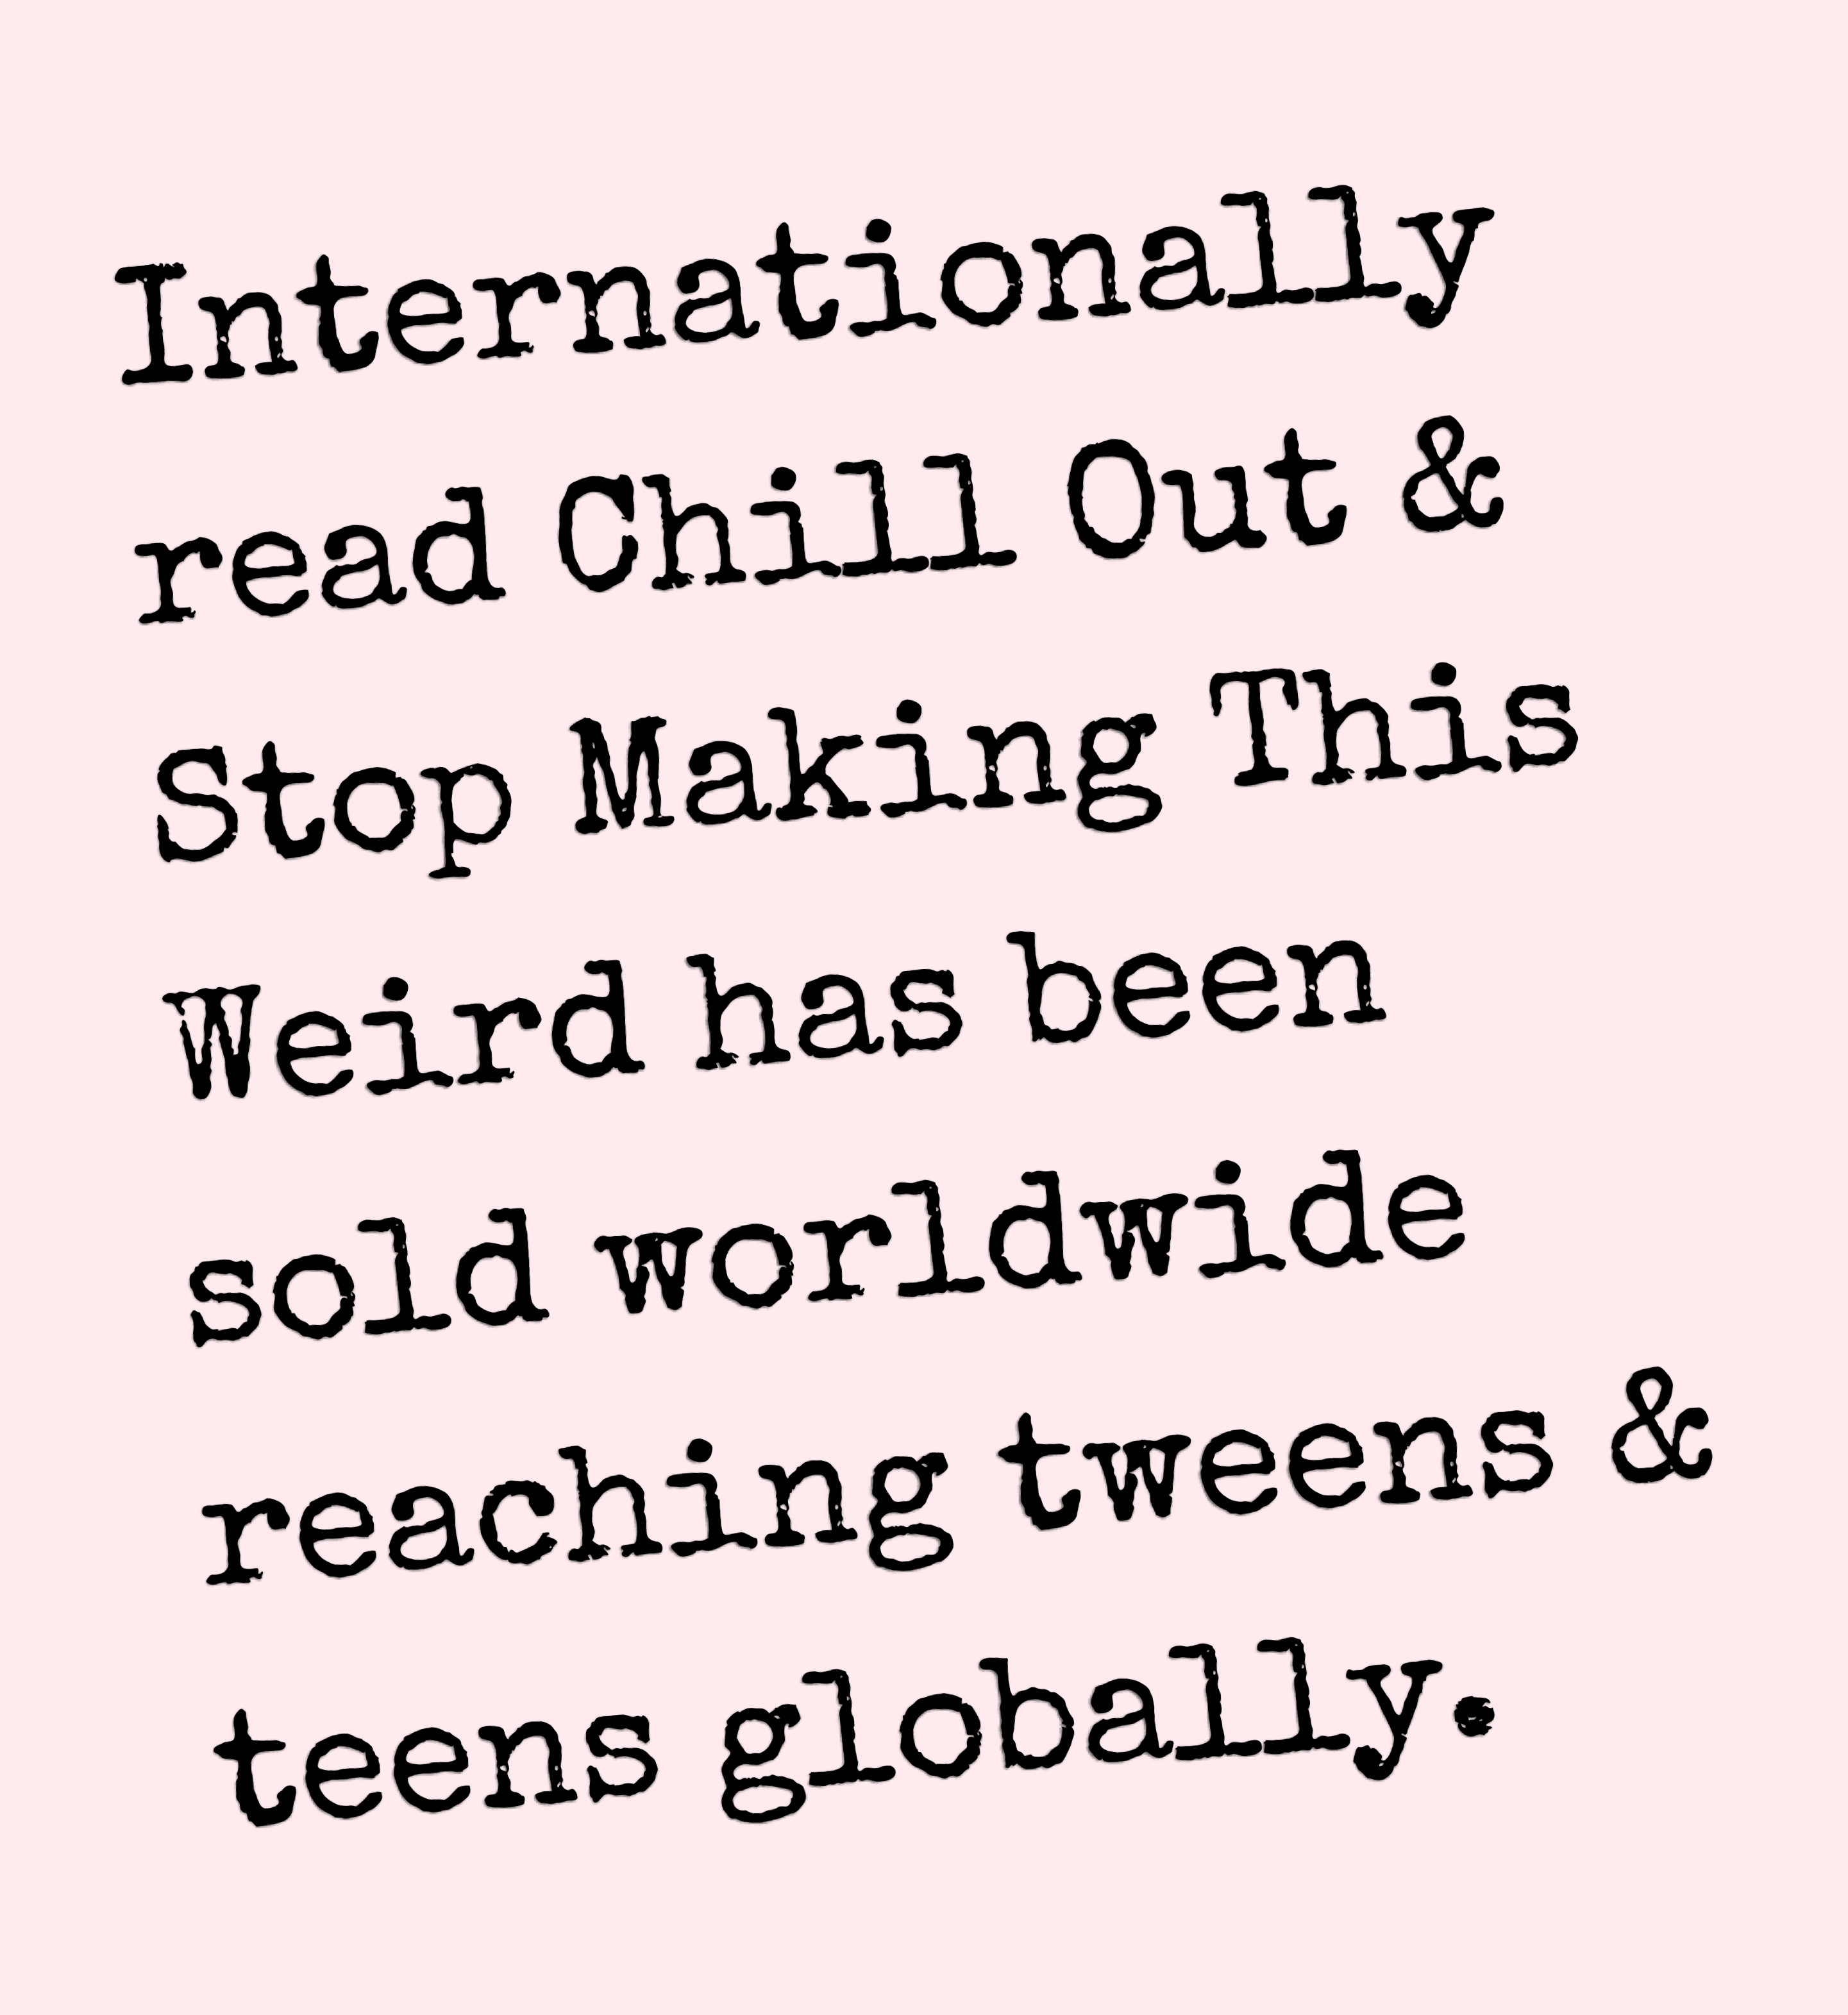 Internationally read by teens globally.